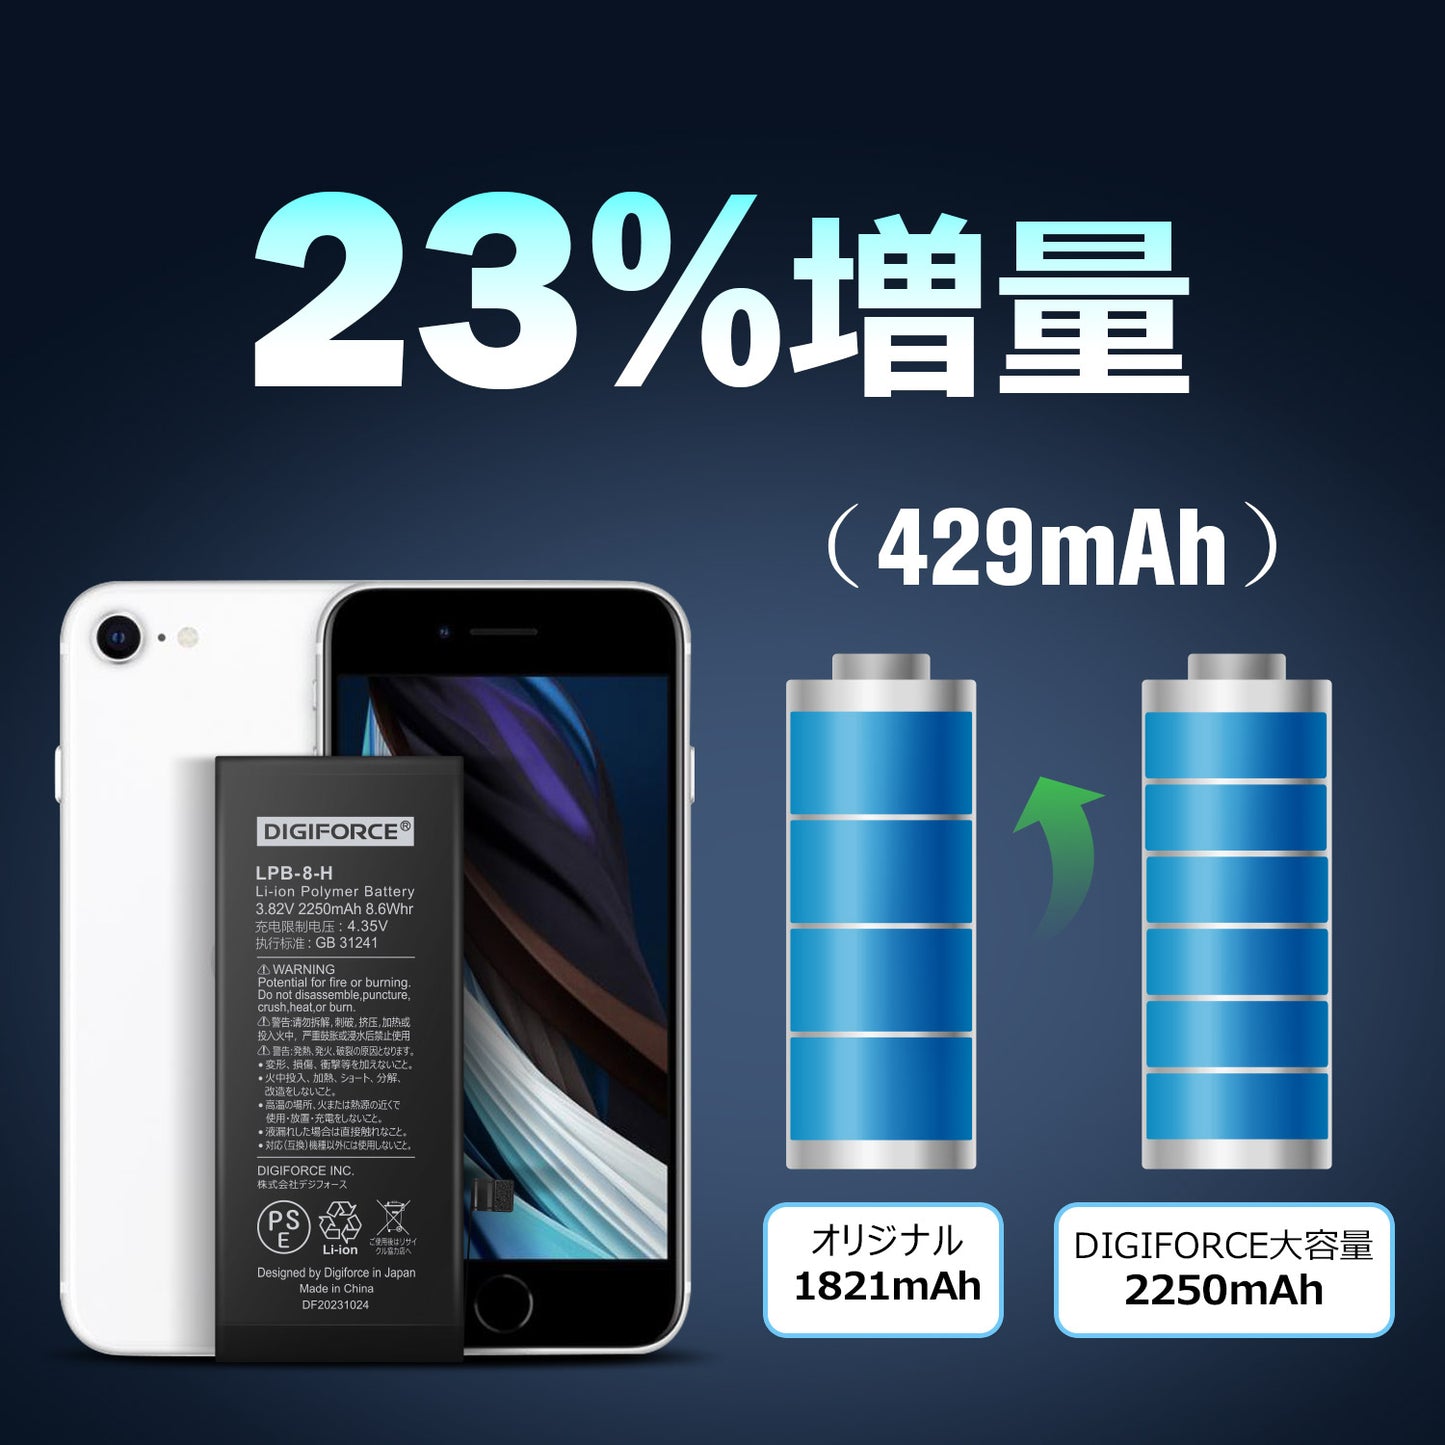 【iPhone 8】互換バッテリー　取説・工具付き　T2-IP8H